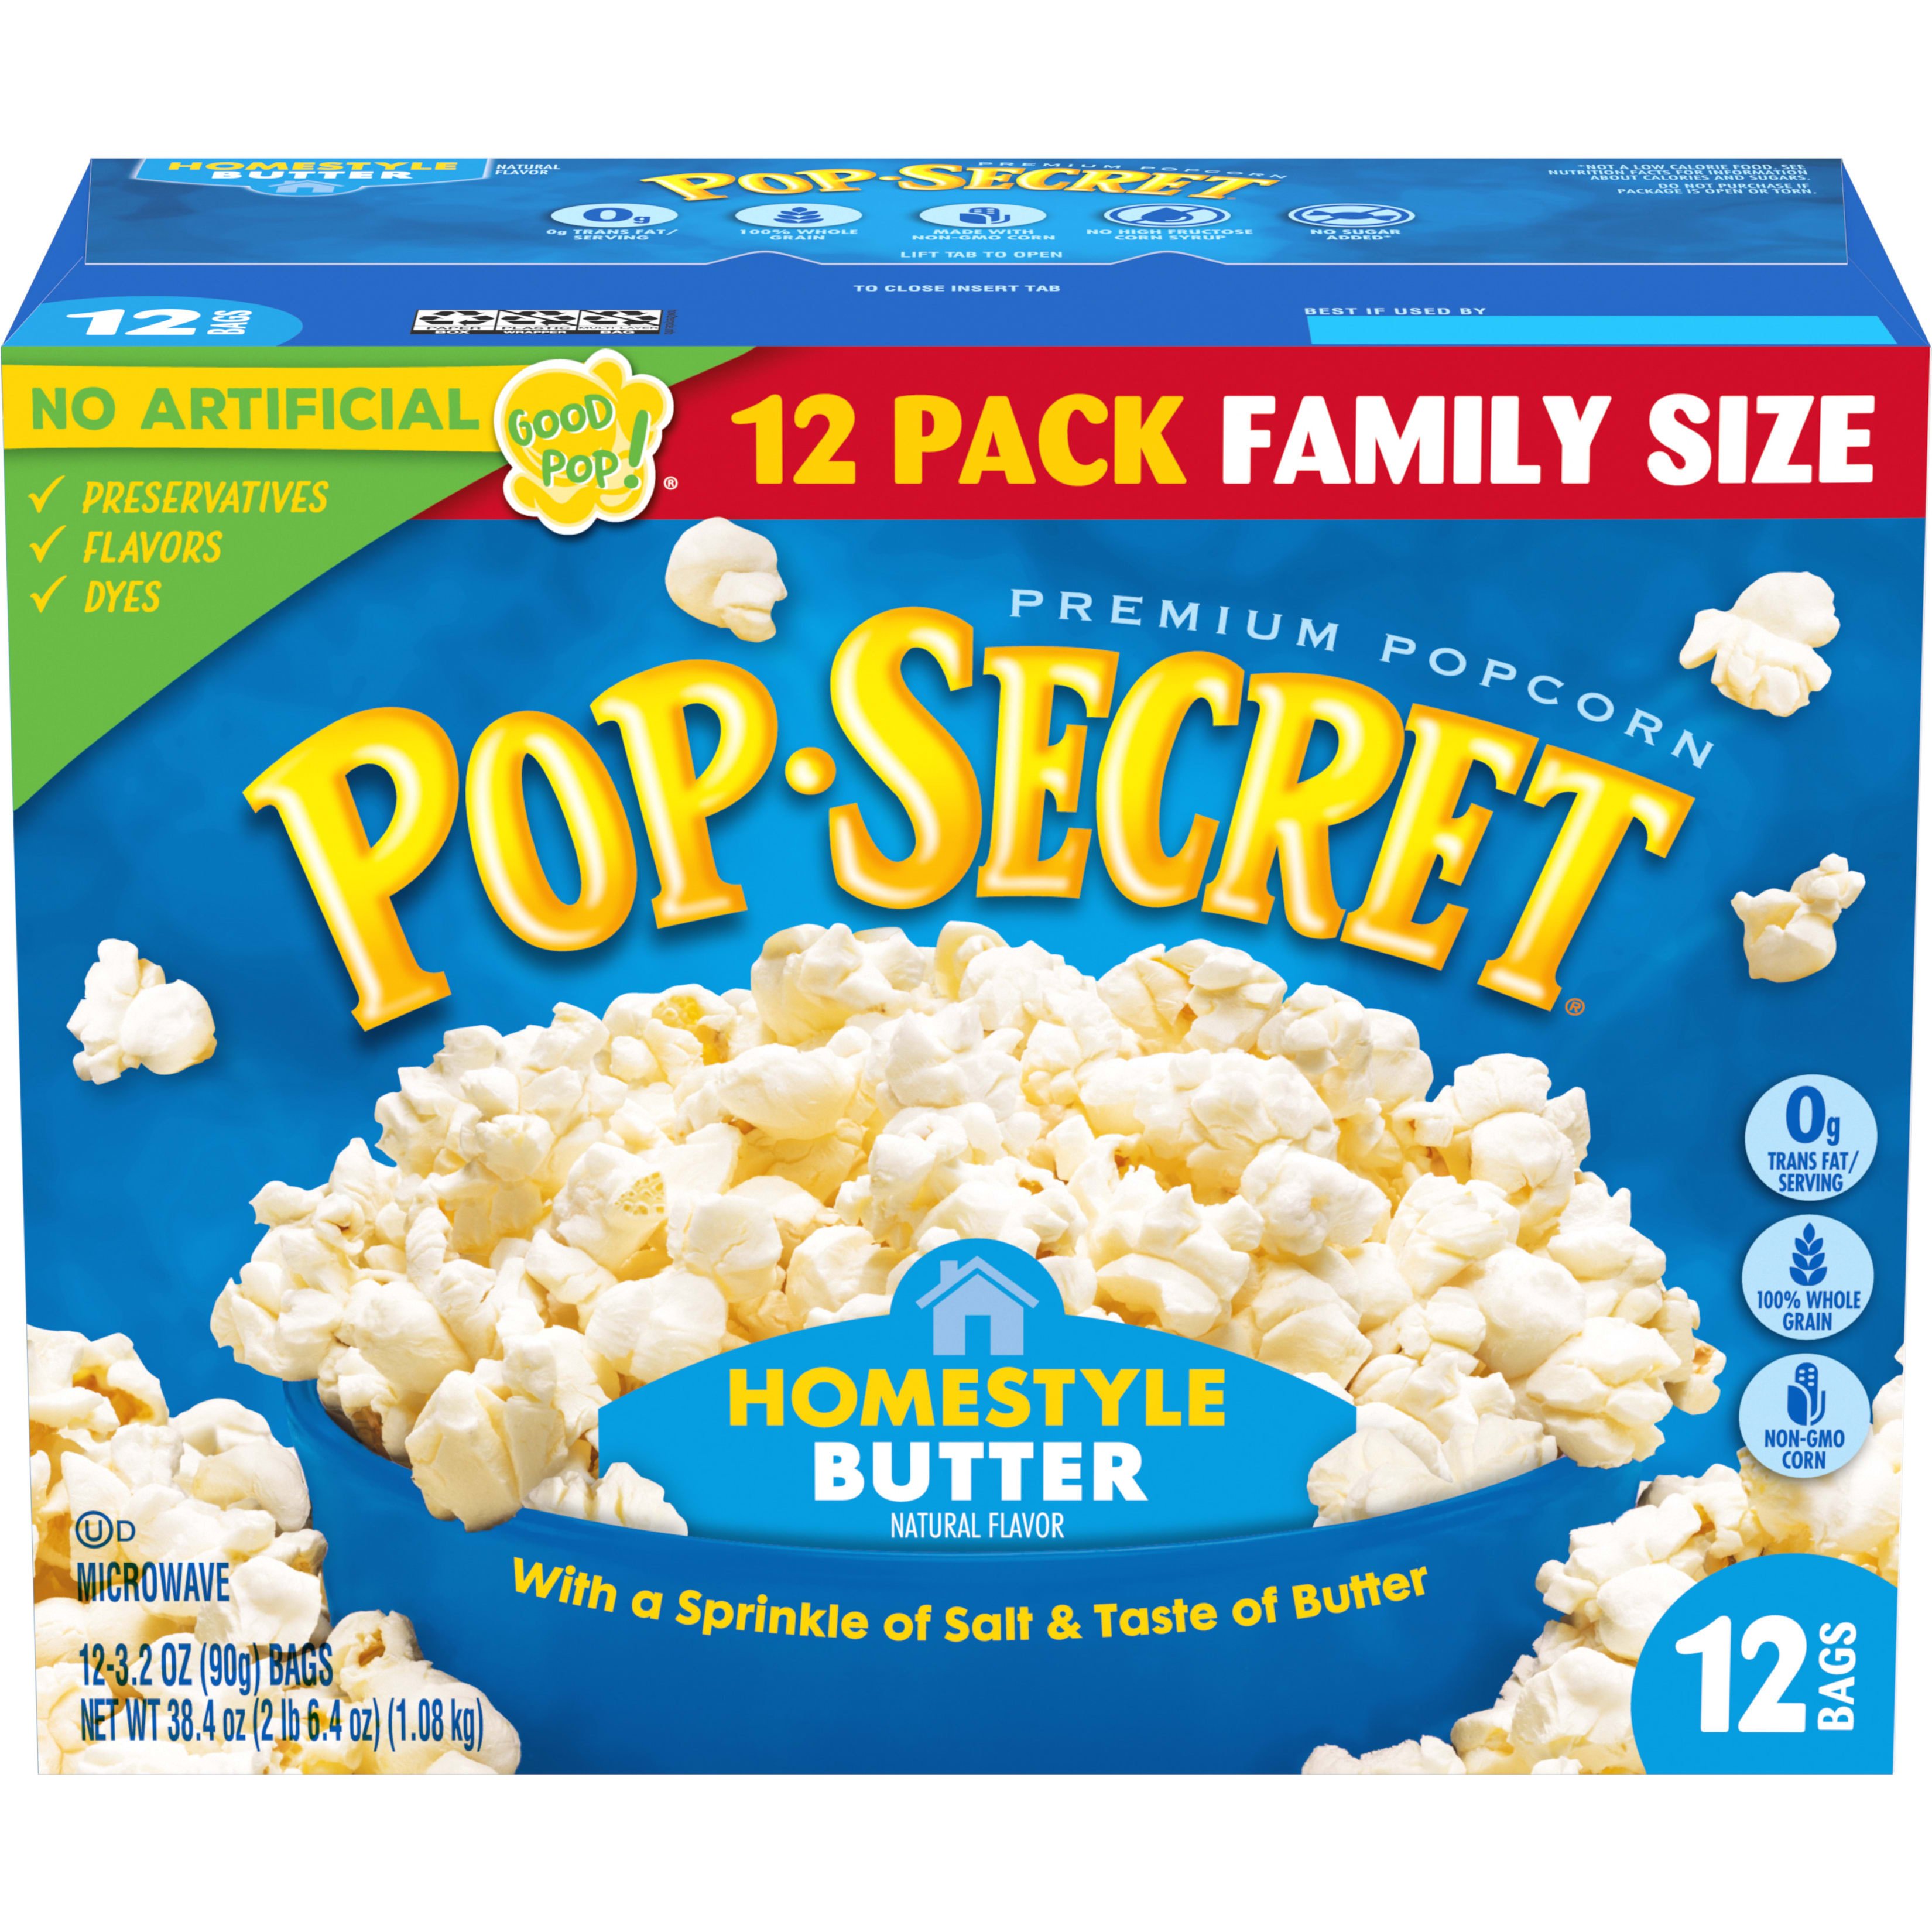 Pop Secret Microwave Popcorn Homestyle Butter Flavor, 3.2 oz Bags Shop Popcorn at H-E-B